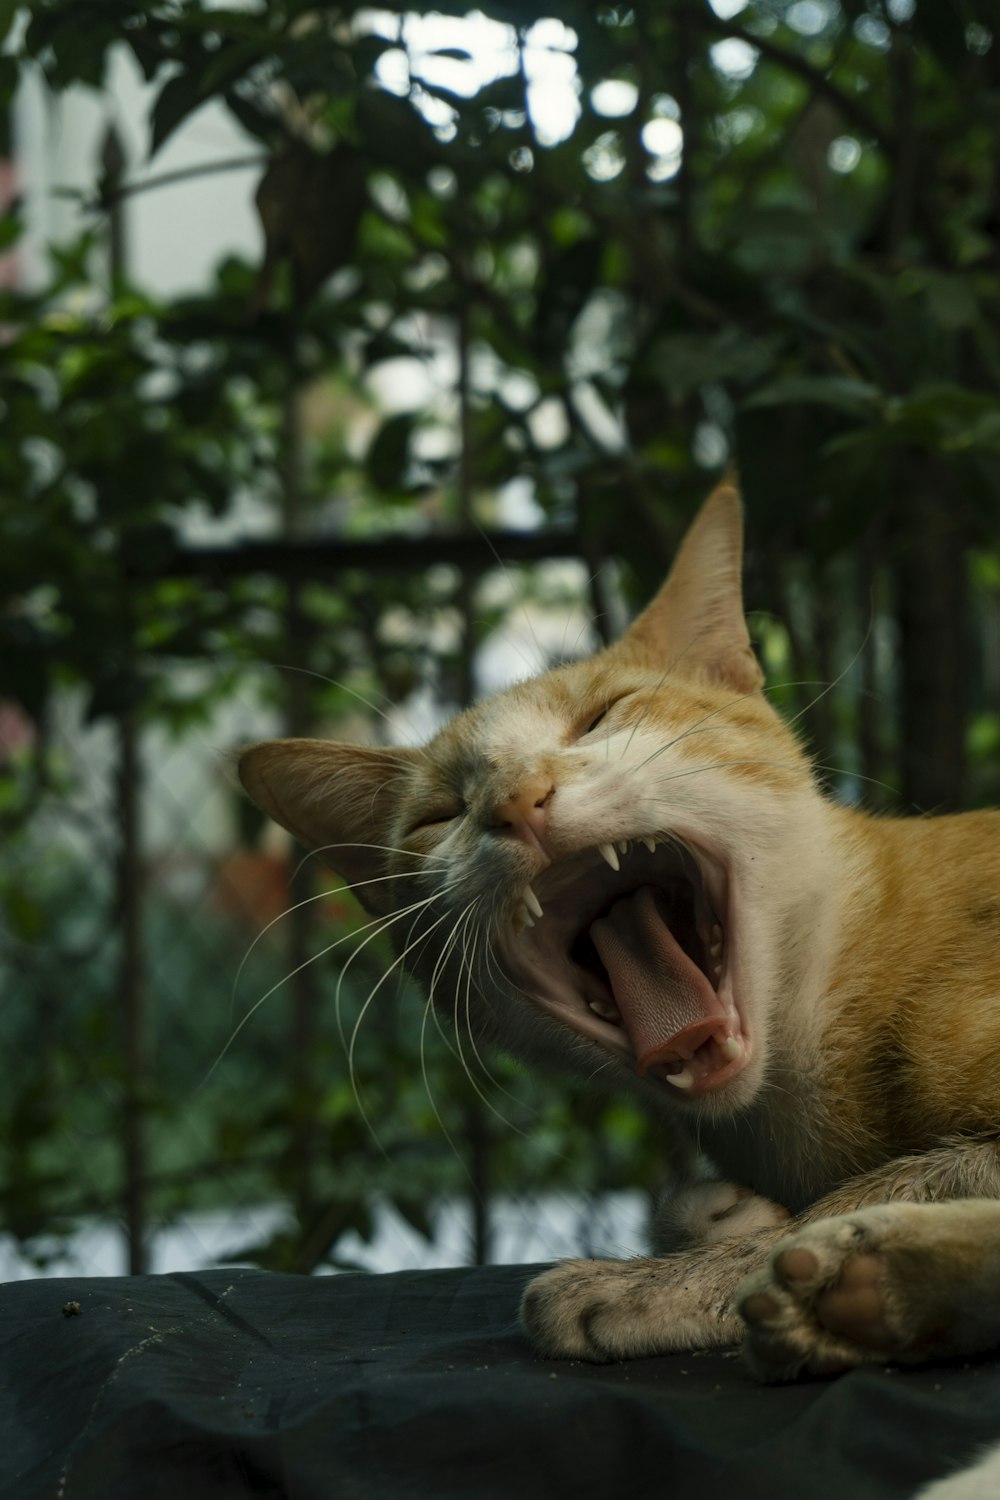 a cat yawning on a ledge